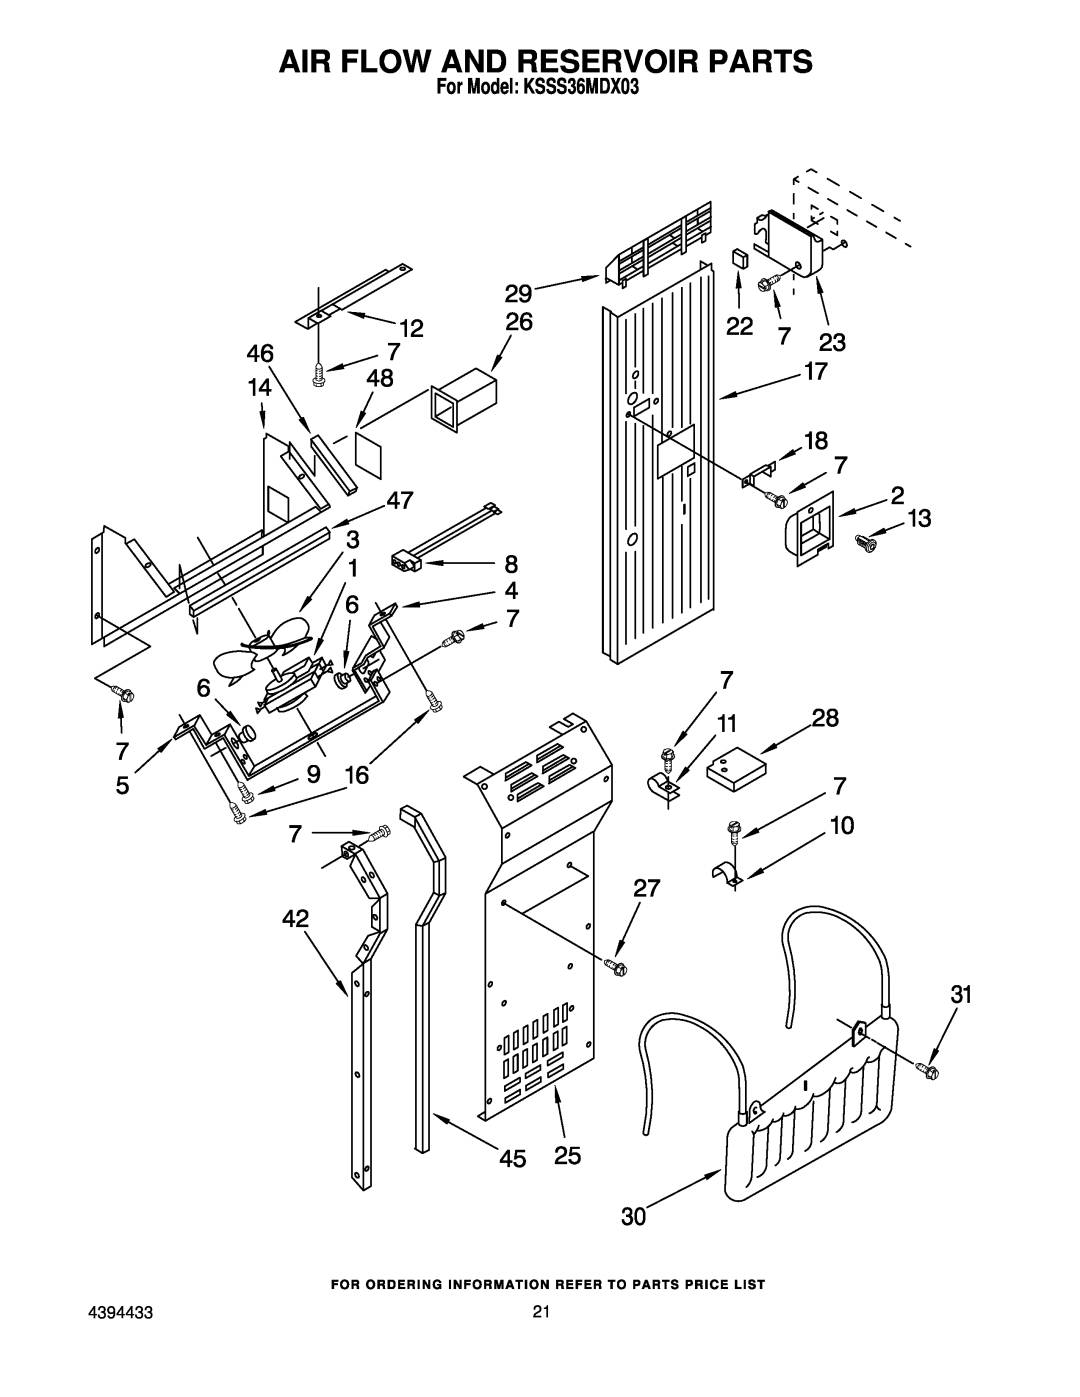 KitchenAid manual Air Flow And Reservoir Parts, For Model KSSS36MDX03 